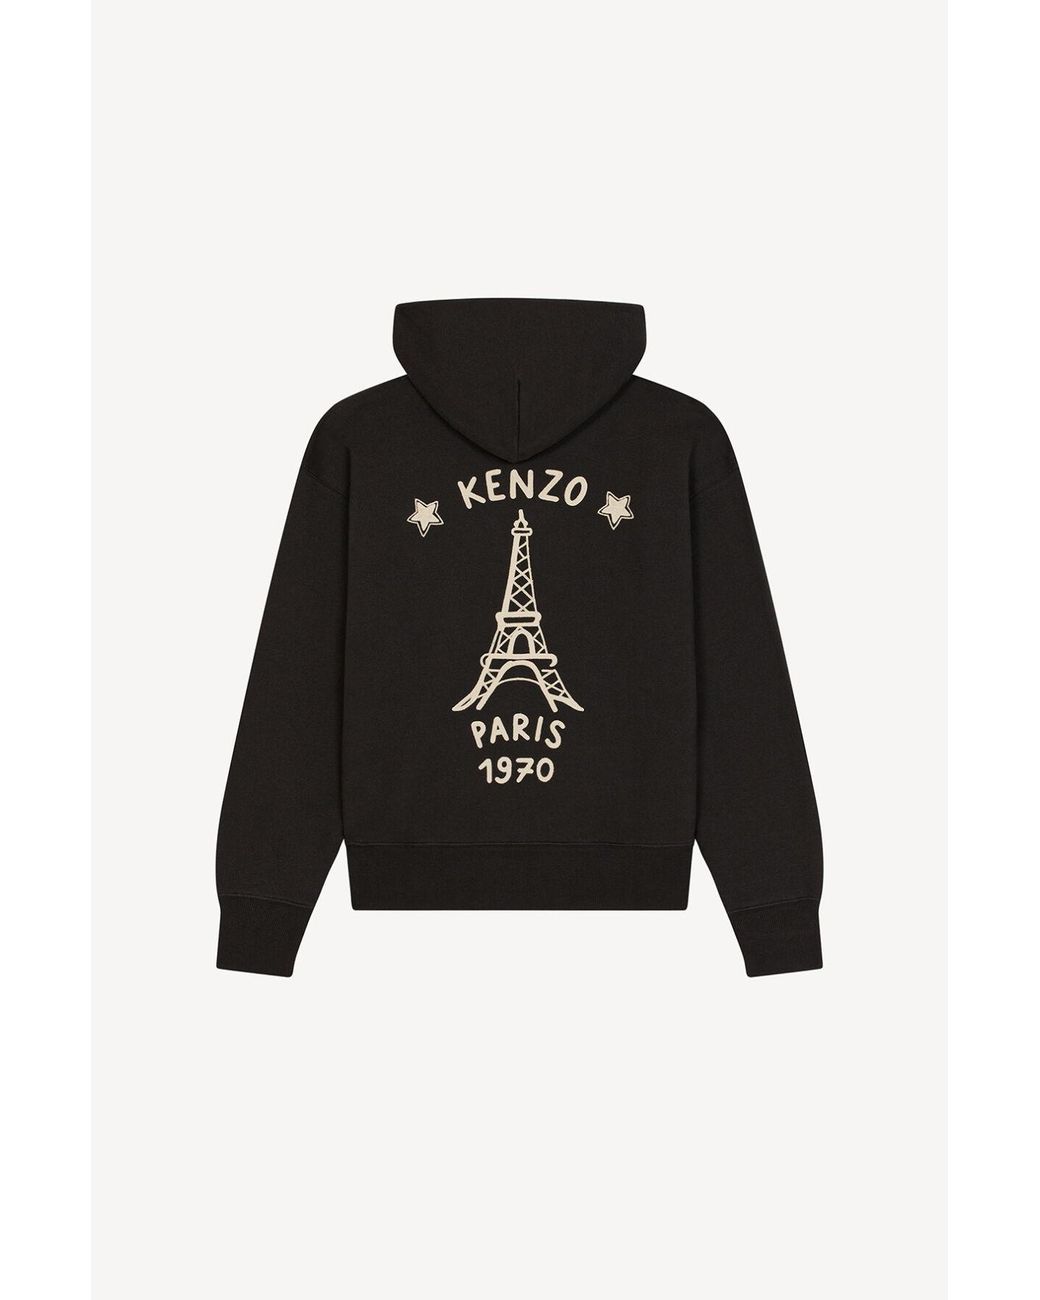 KENZO 'souvenir' Oversized Hooded Sweatshirt in Black for Men | Lyst UK